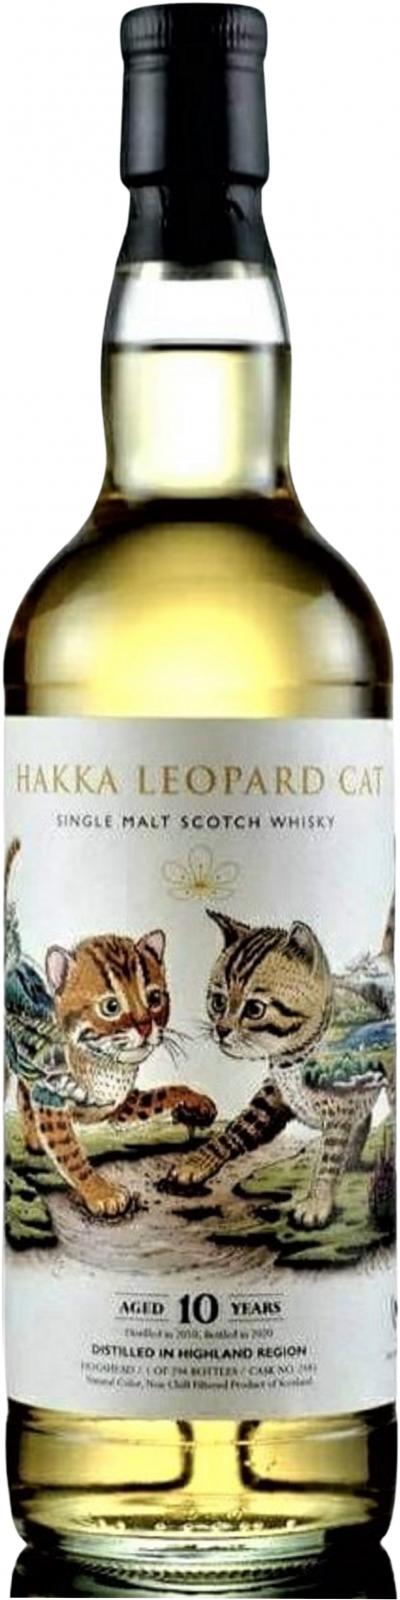 Highland 2010 TWf Hakka Leopard Cat #2485 Wen Ho 59.6% 700ml